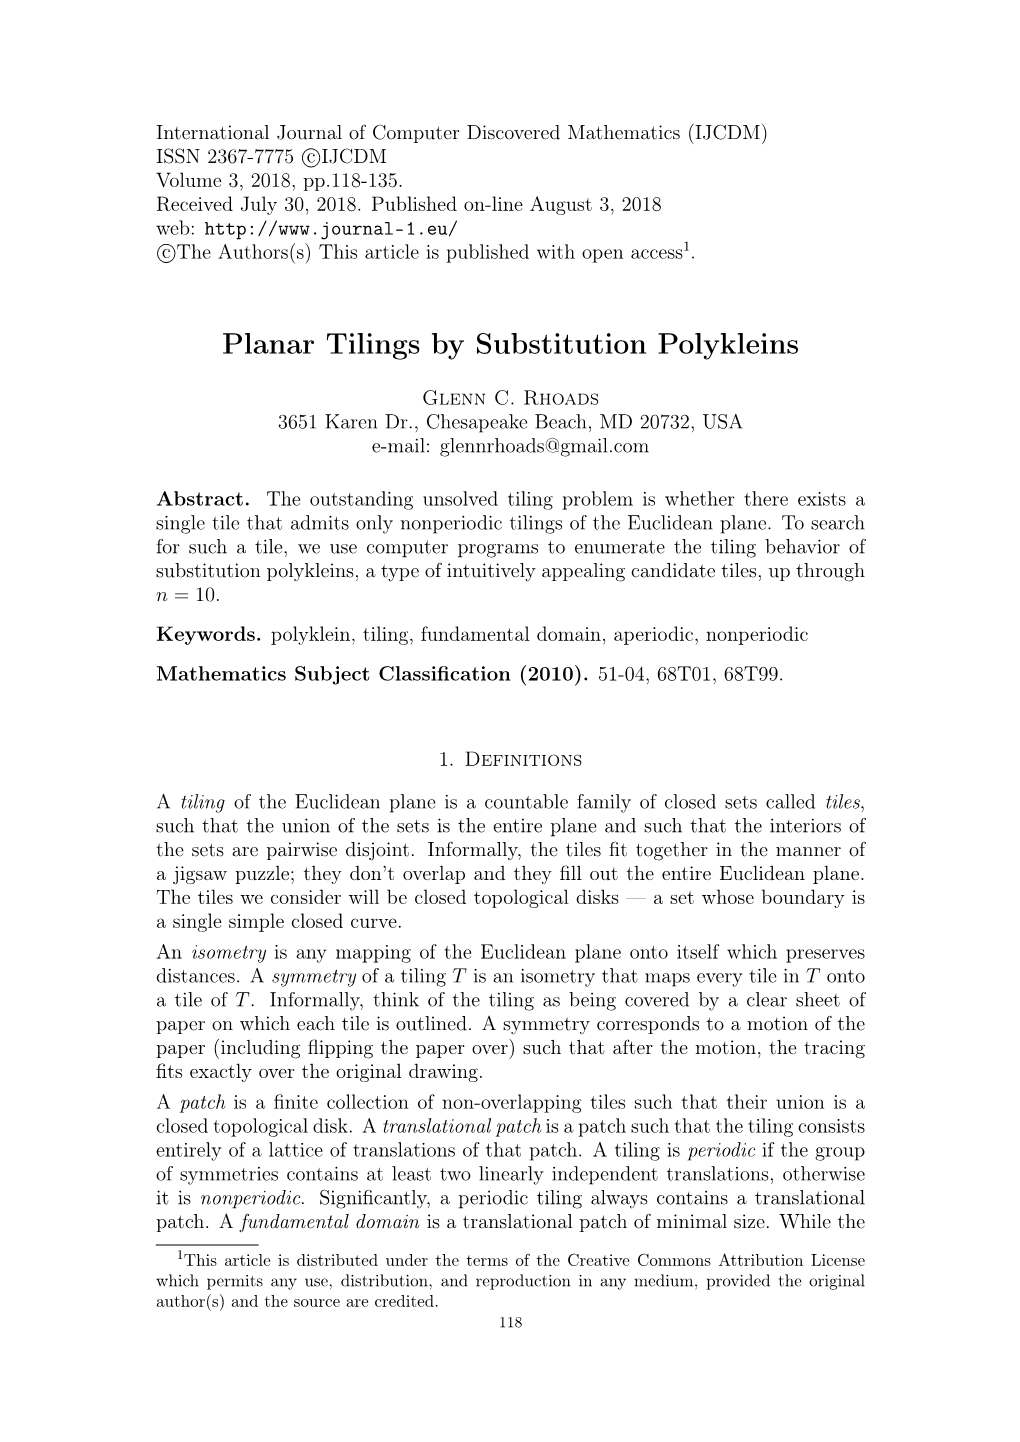 Glenn C. Rhoads, Planar Tilings by Substitution Polykleins, Pp.118-135